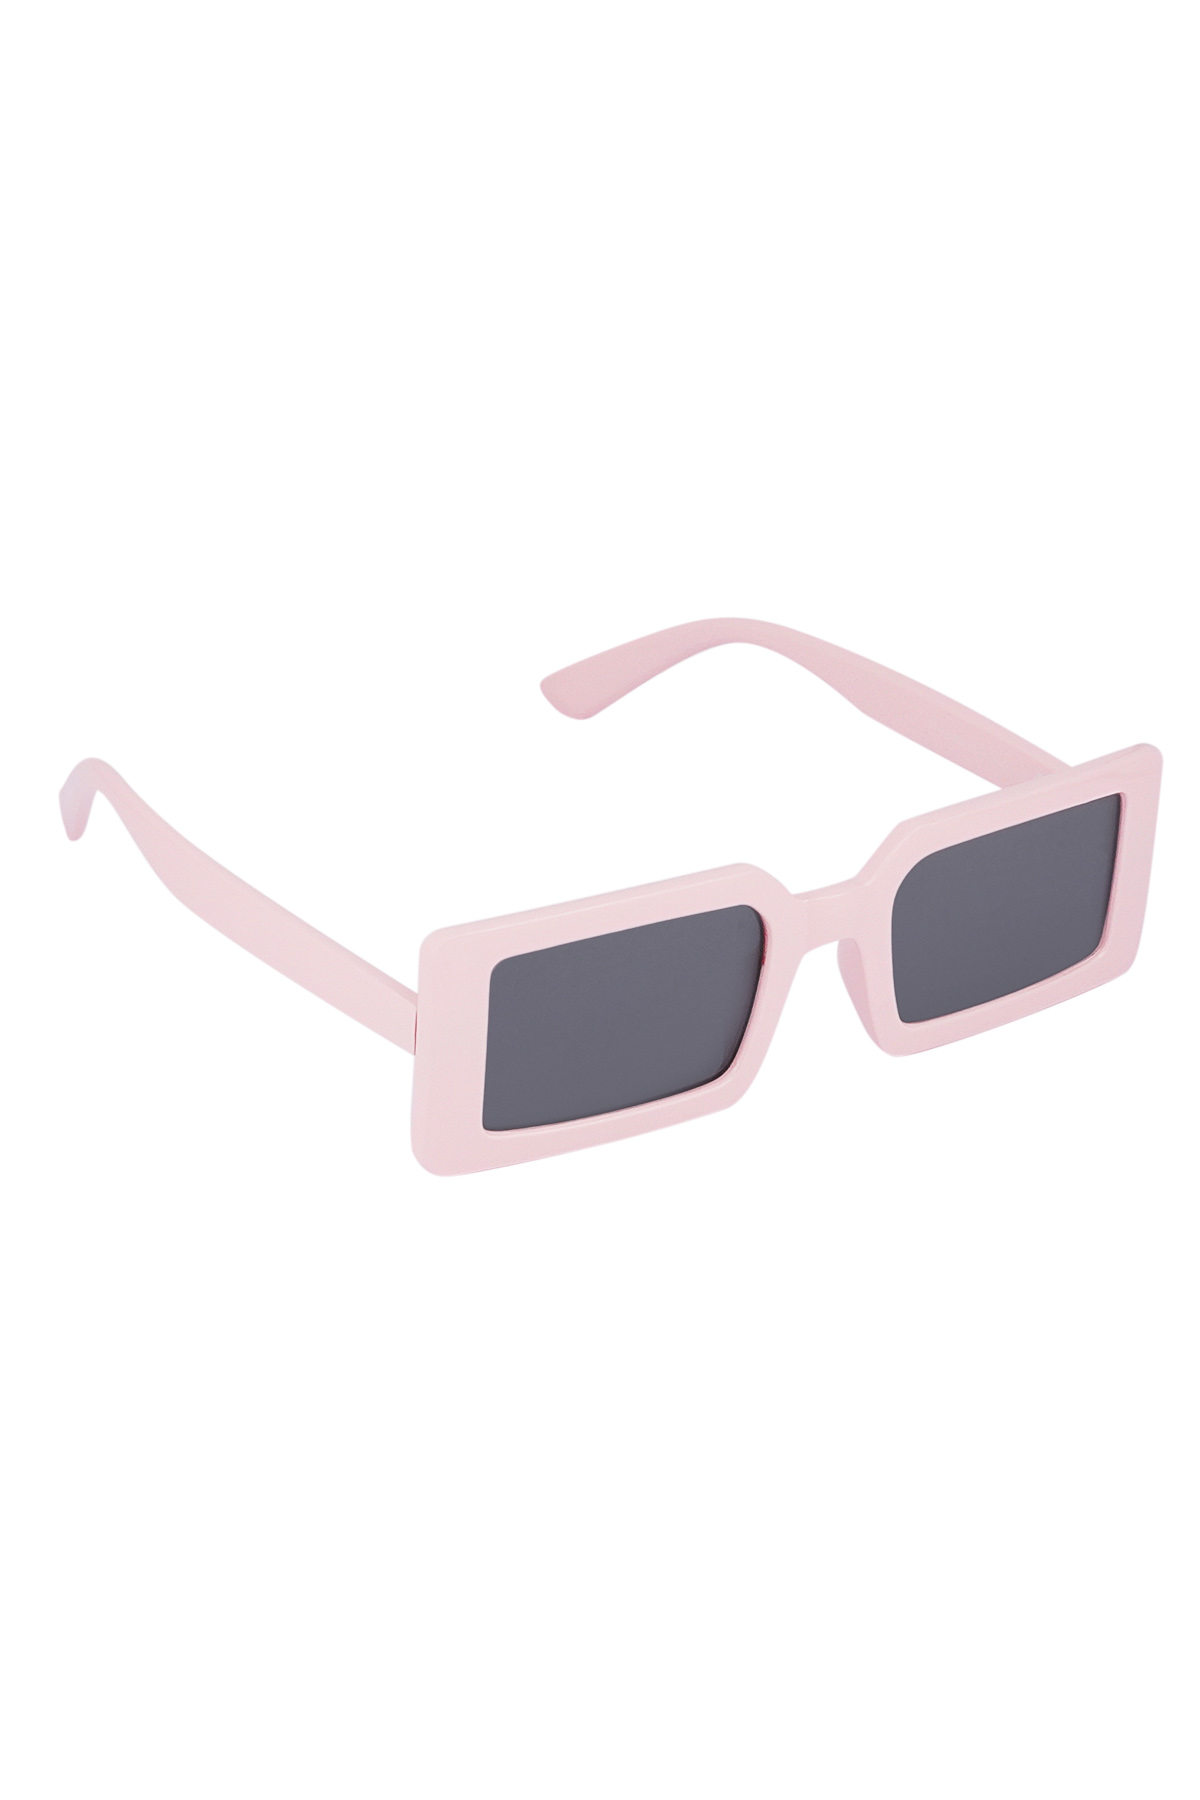 Shimmerglow sunglasses - pink 